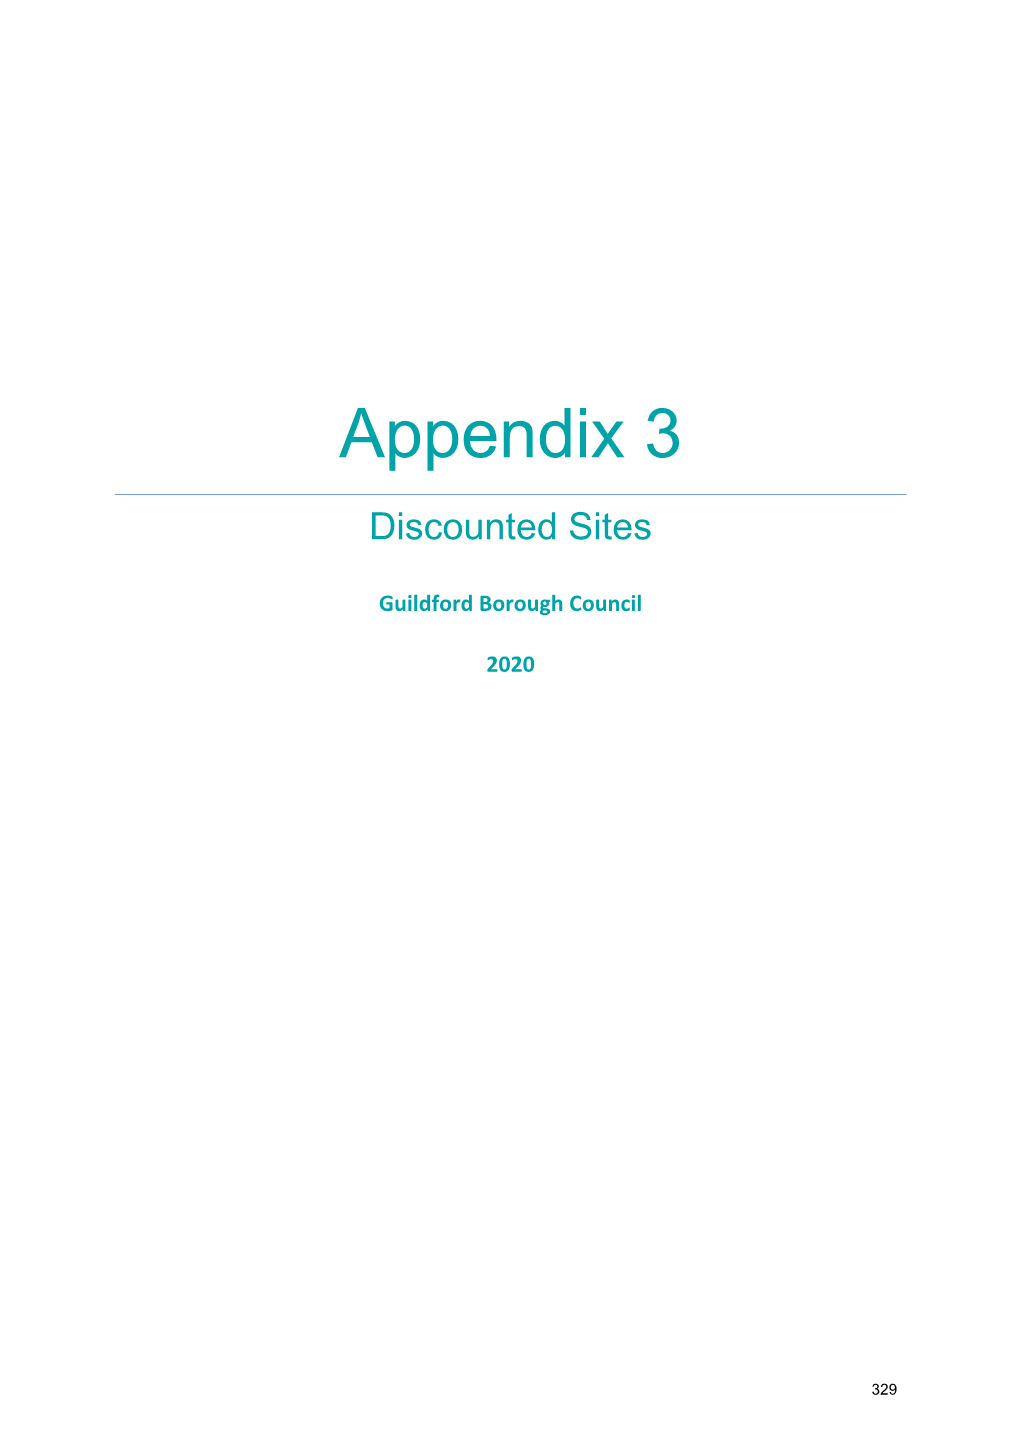 Appendix 3: Discounted Sites